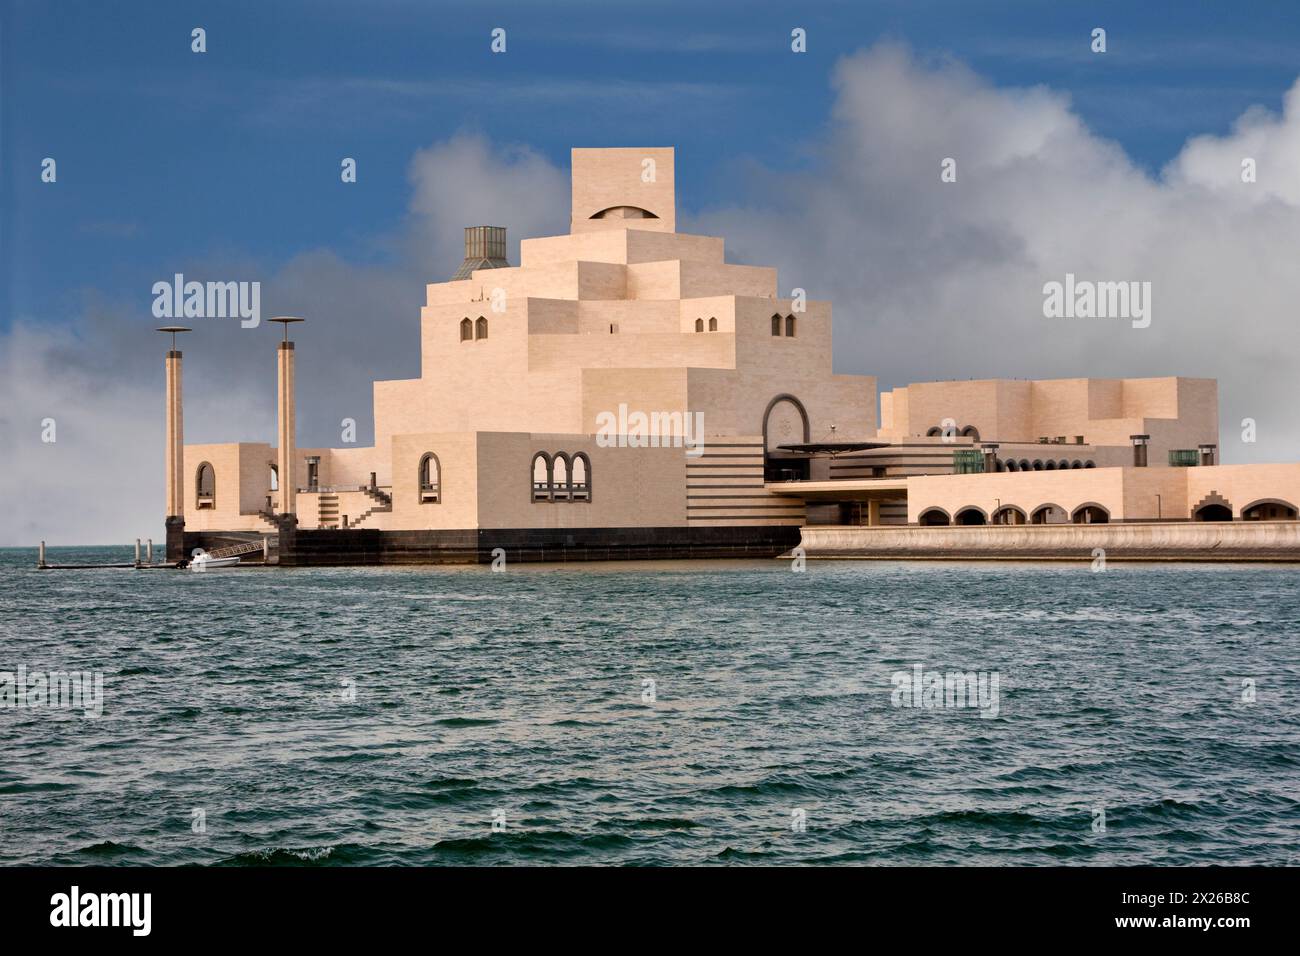 Doha, Qatar. Museum of Islamic Art, designed by architect I.M. Pei. Stock Photo